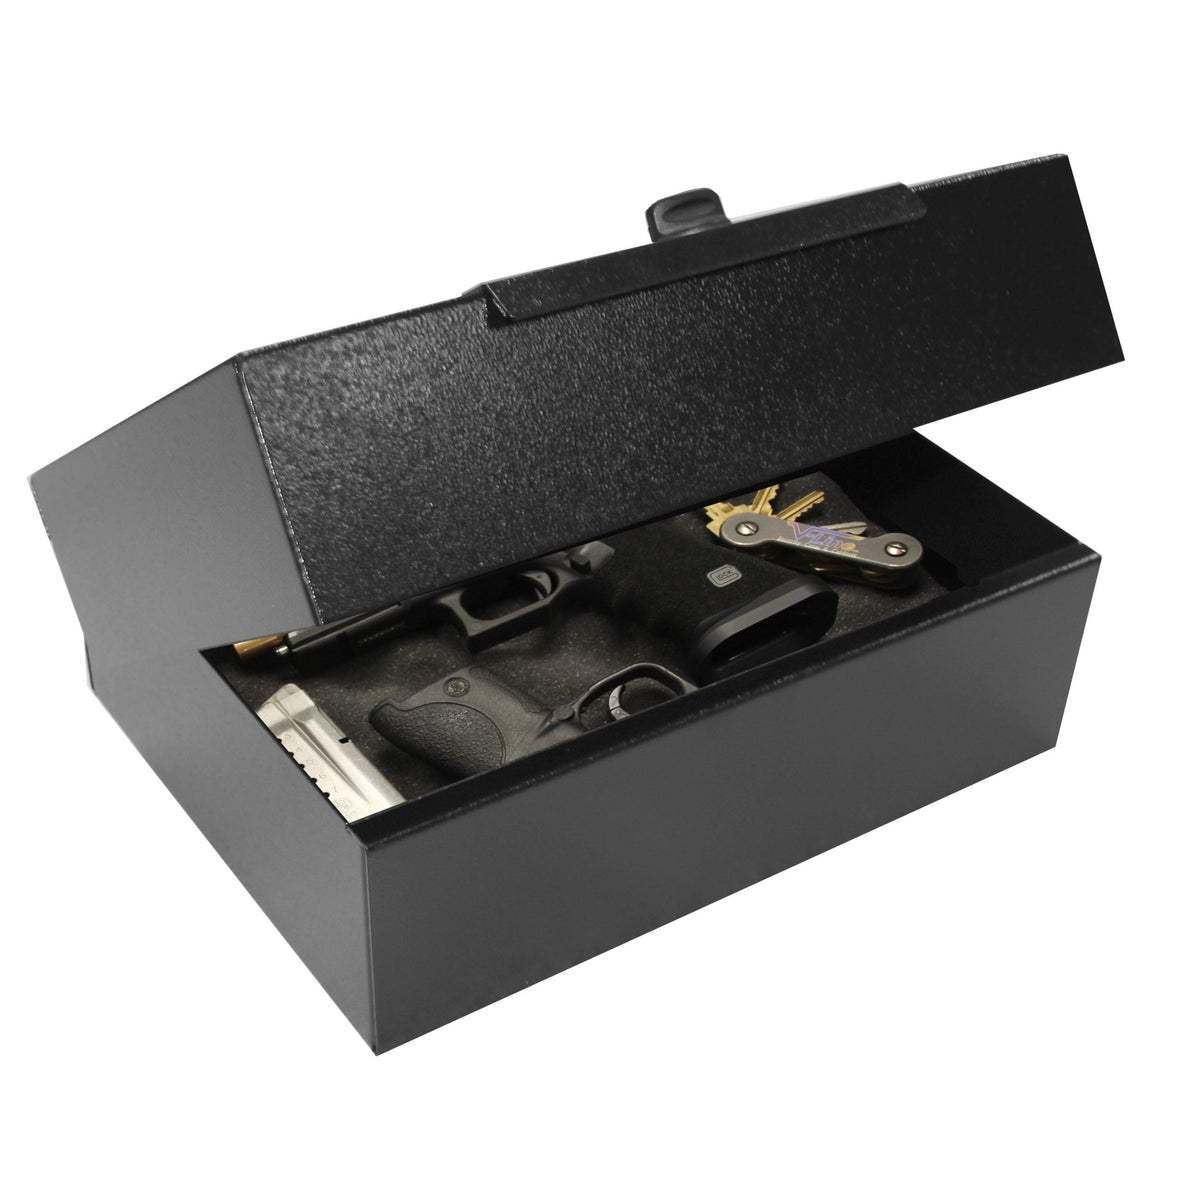 V-Line Top Draw XL Large Capacity Pistol Case